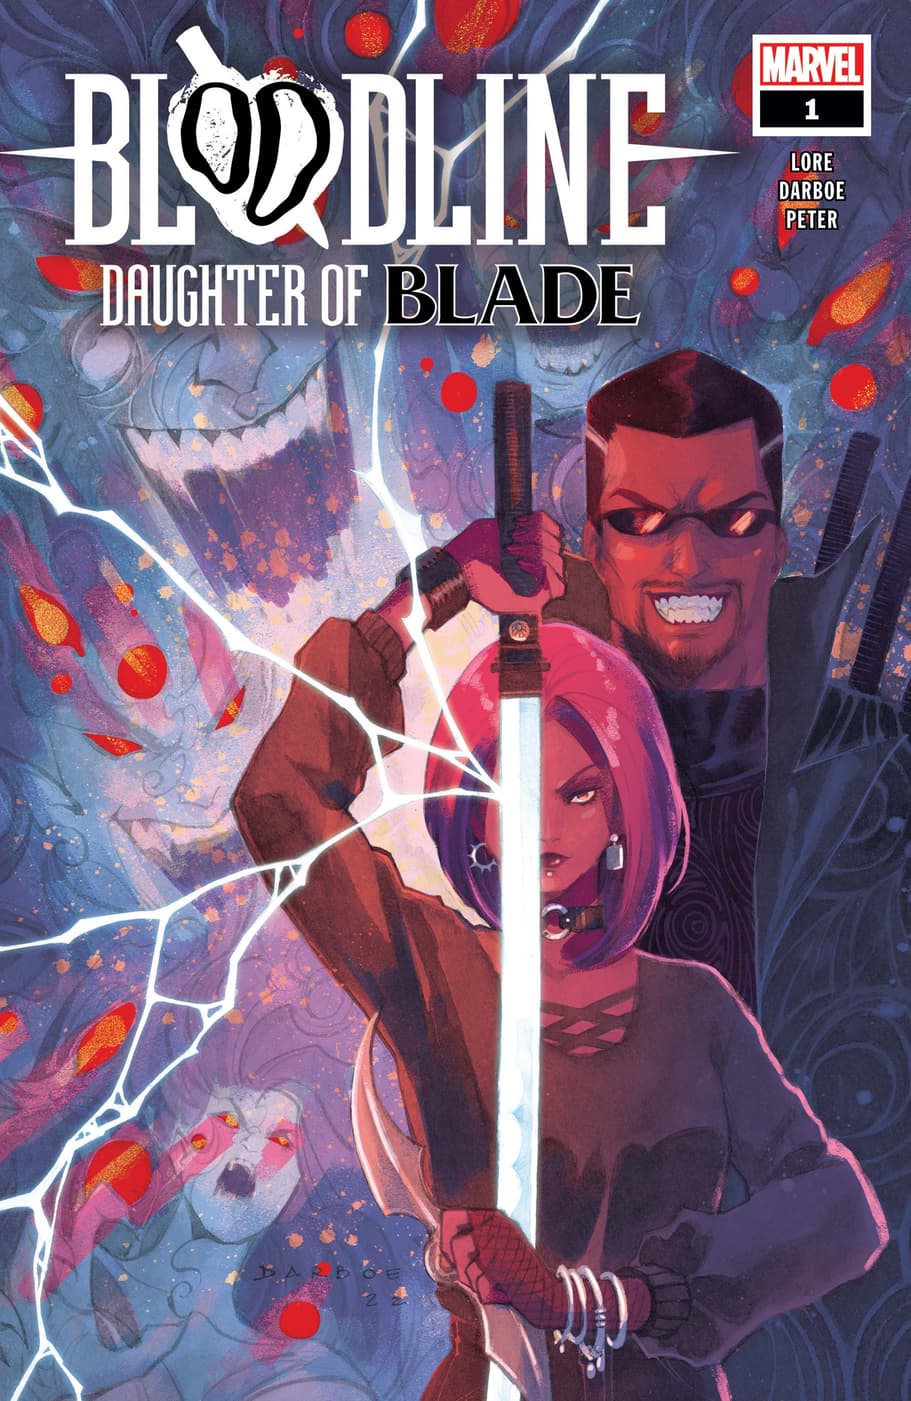 BLOODLINE: DAUGHTER OF BLADE (2023) #1 cover by Karen Darboe